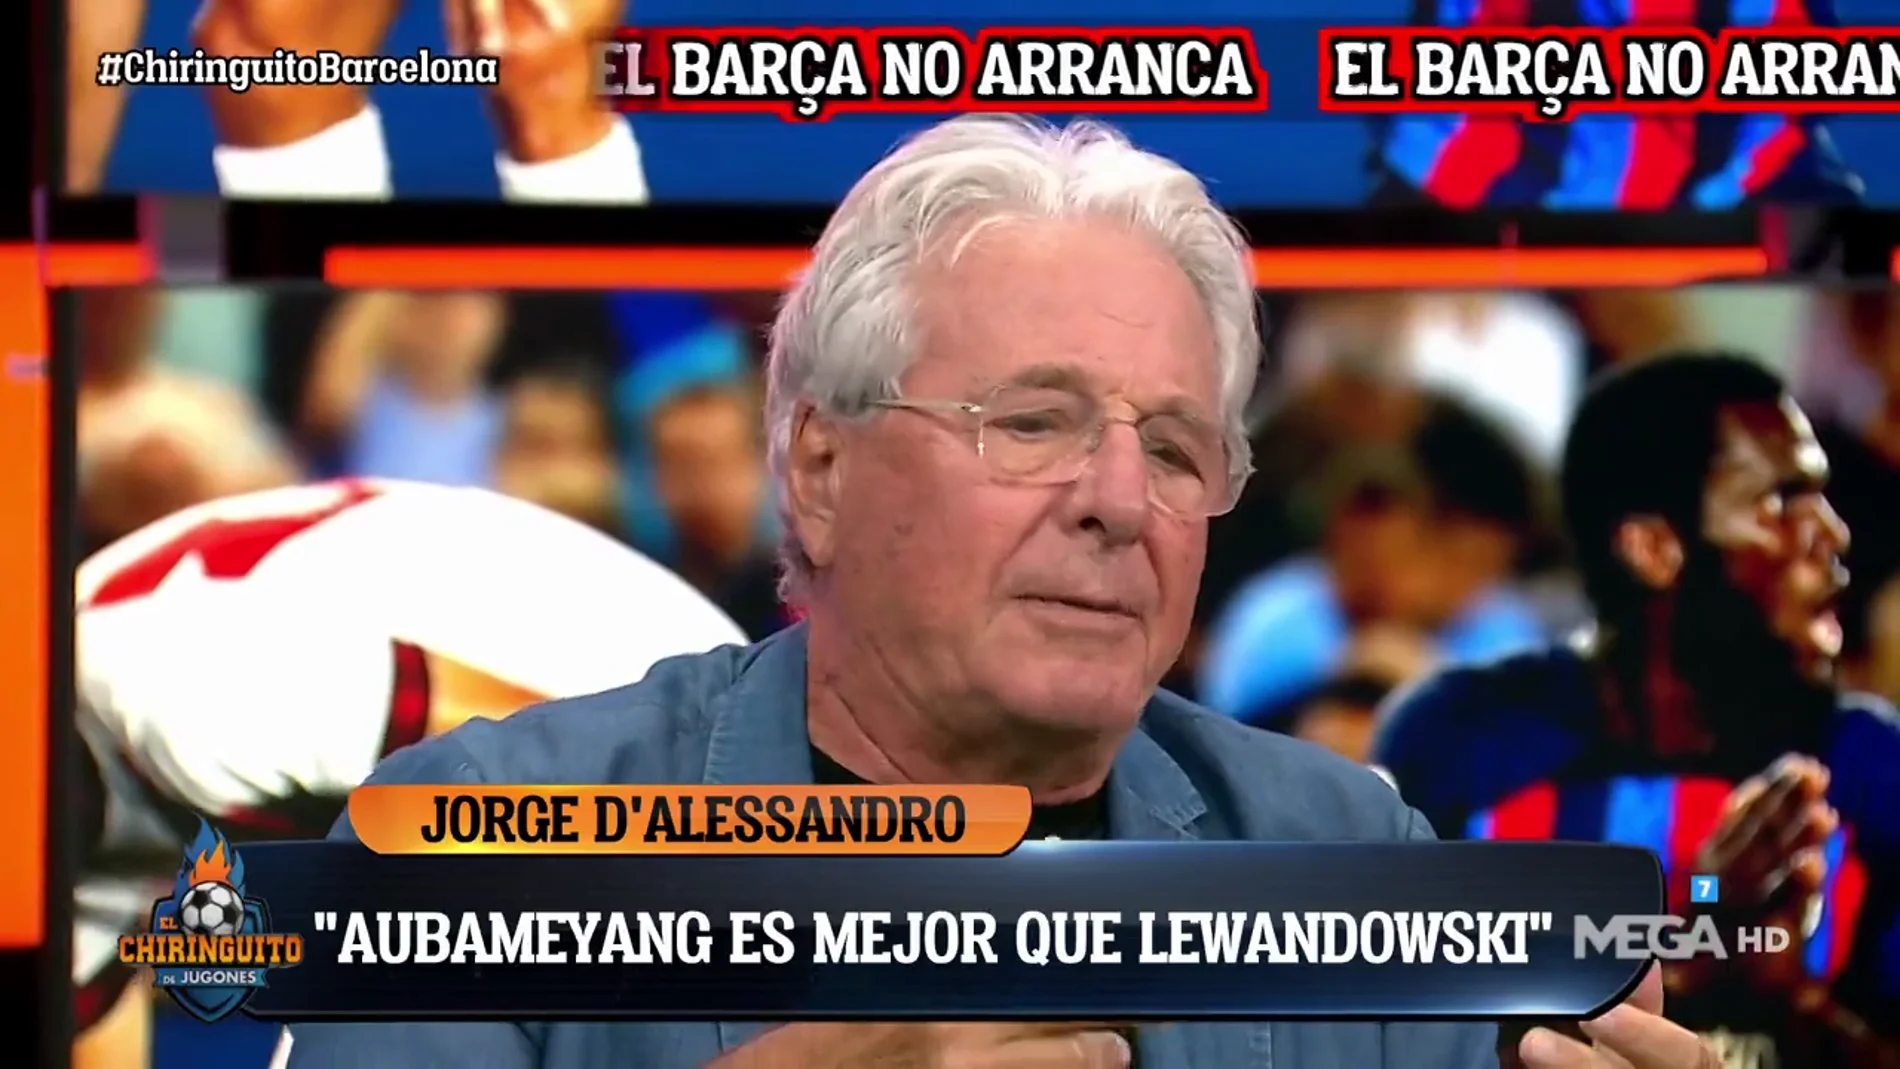 "Aubameyang es mejor que Lewandowski"